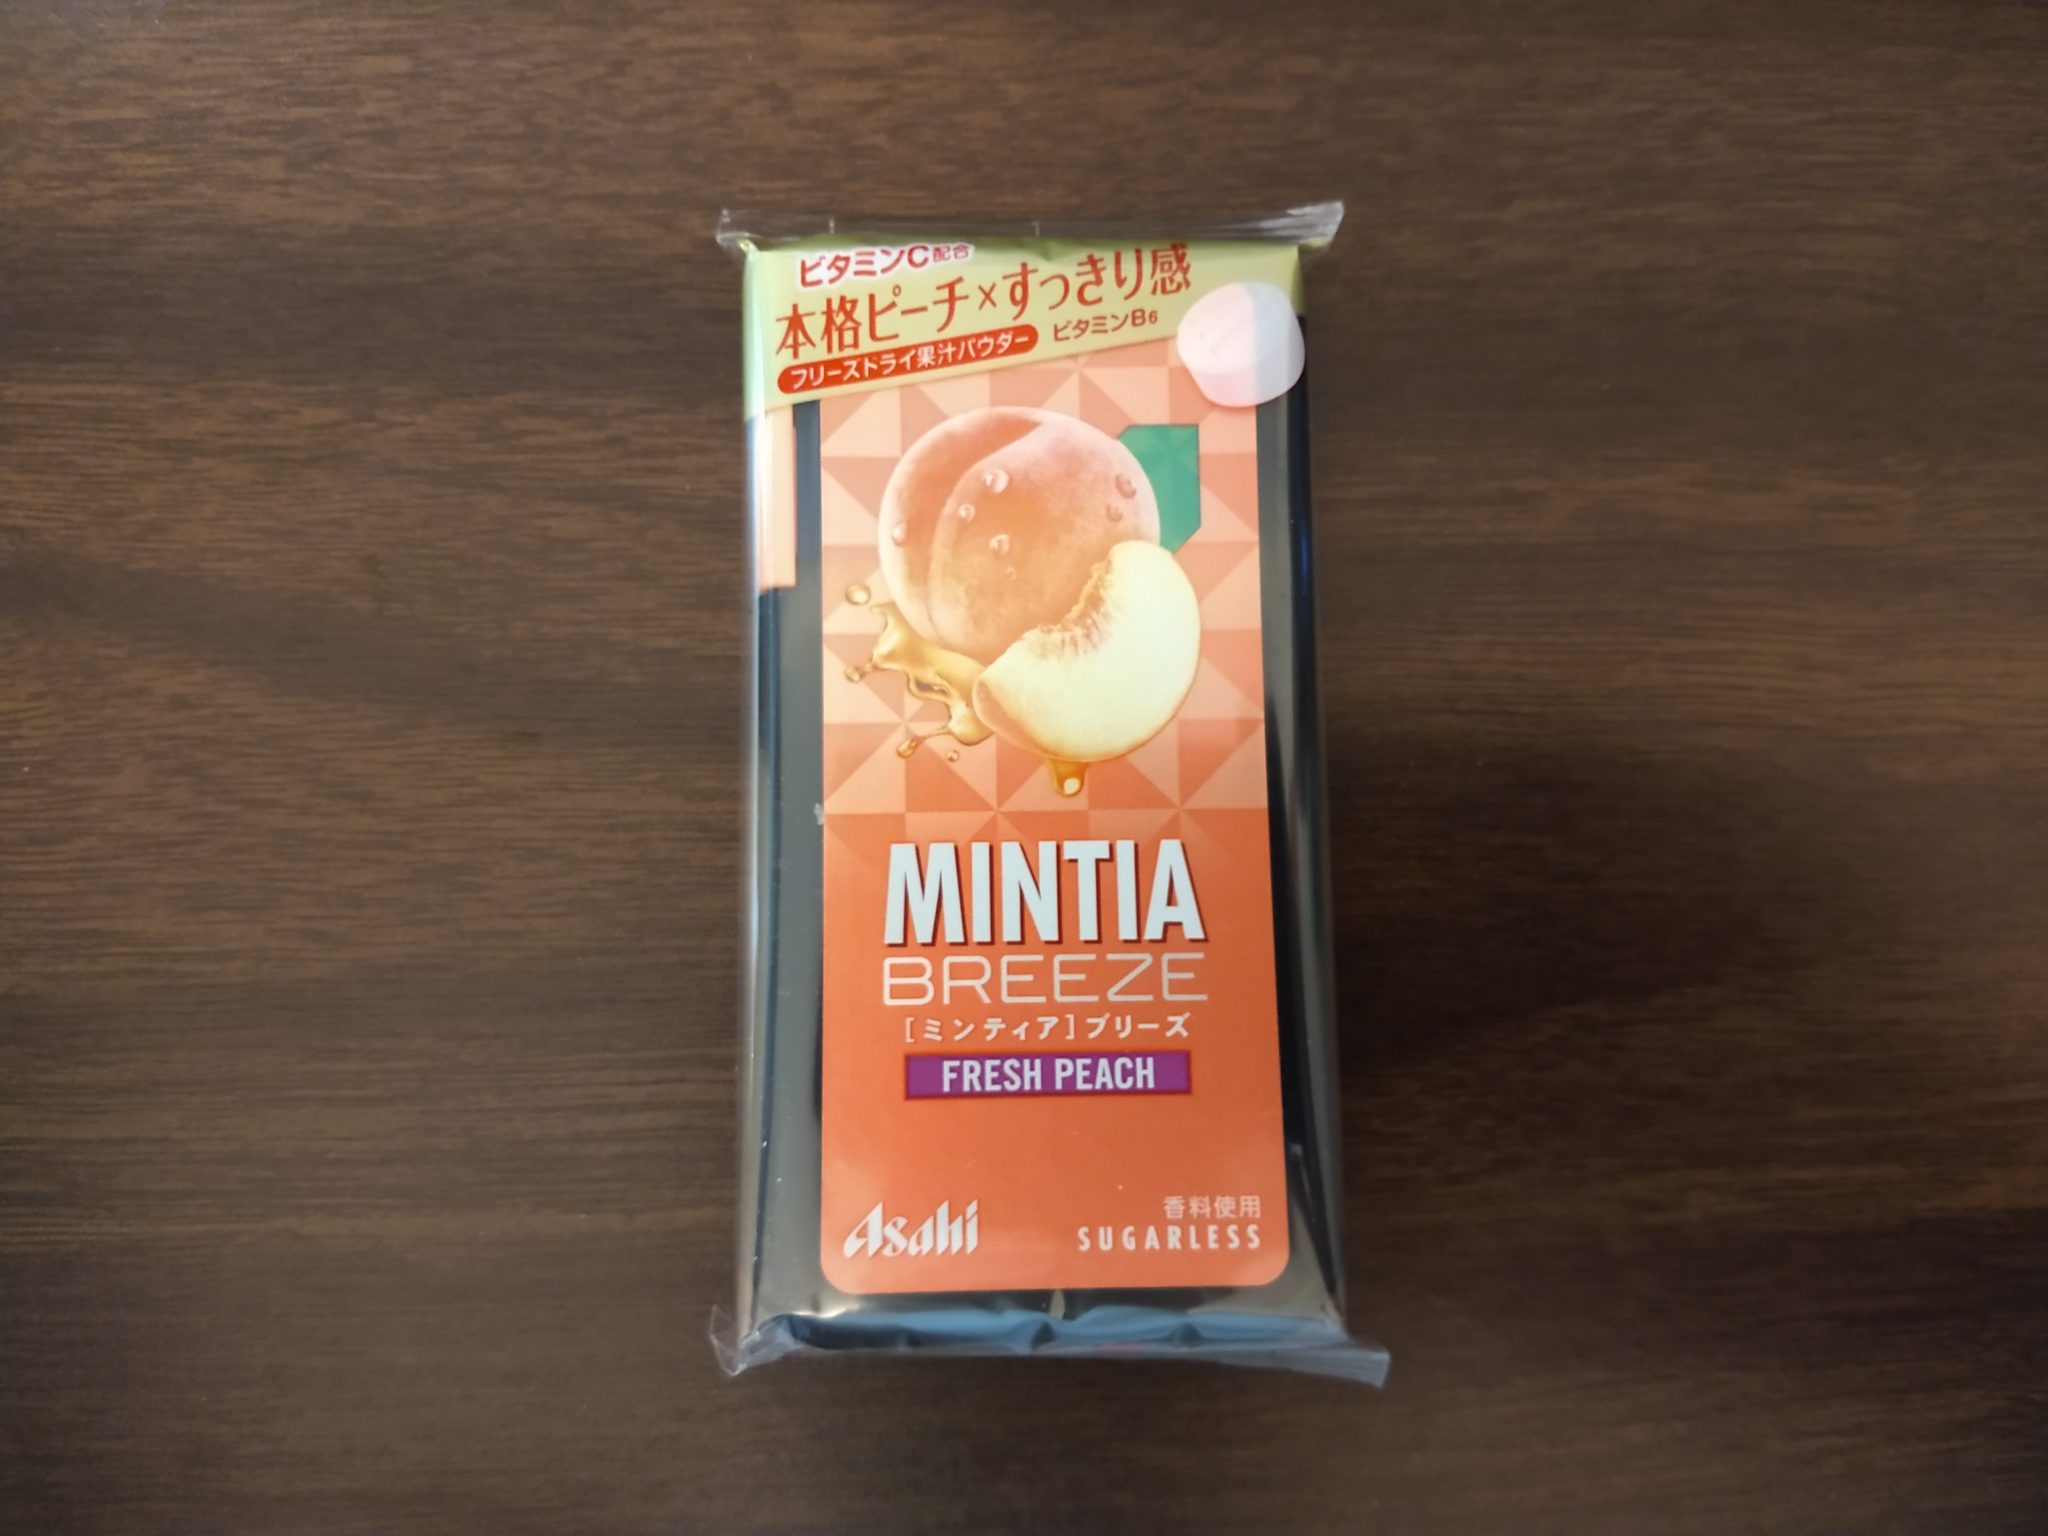 Mintia Breeze – Fresh Peach